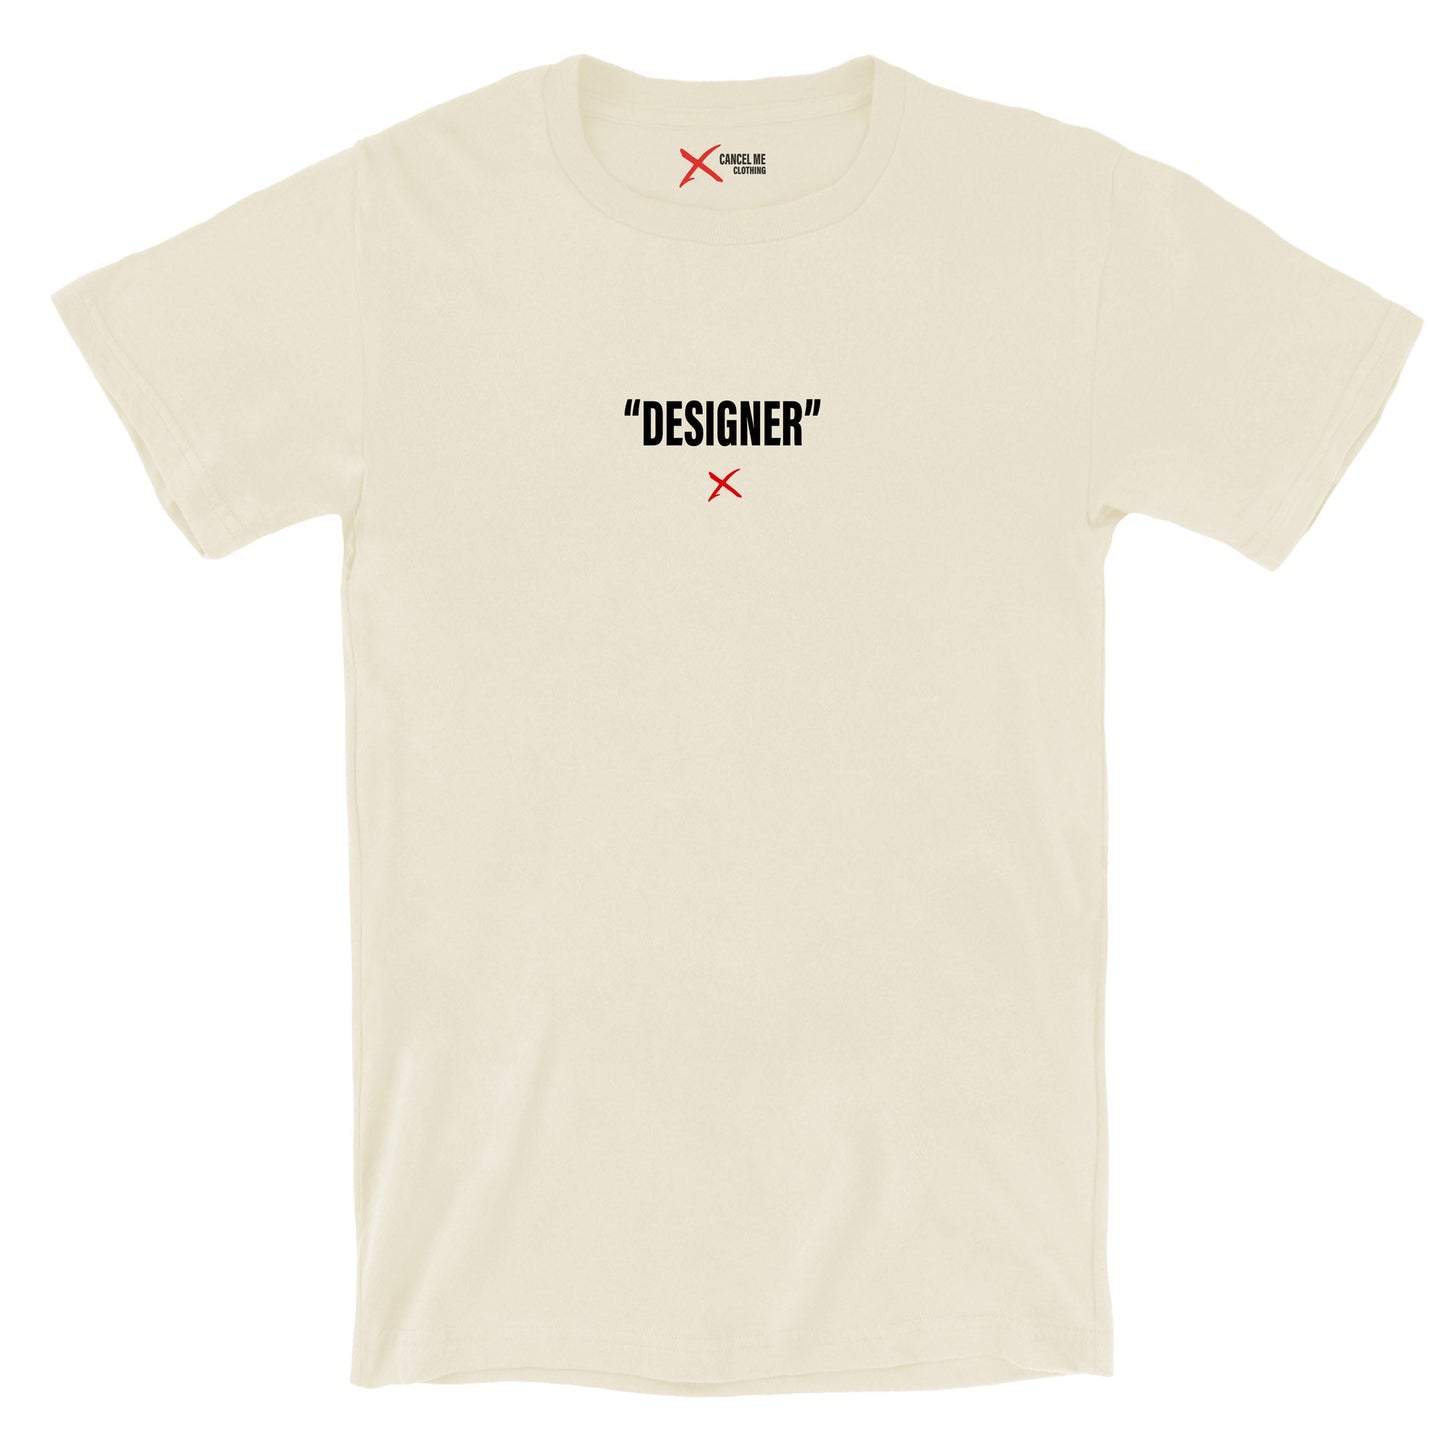 "DESIGNER" - Shirt